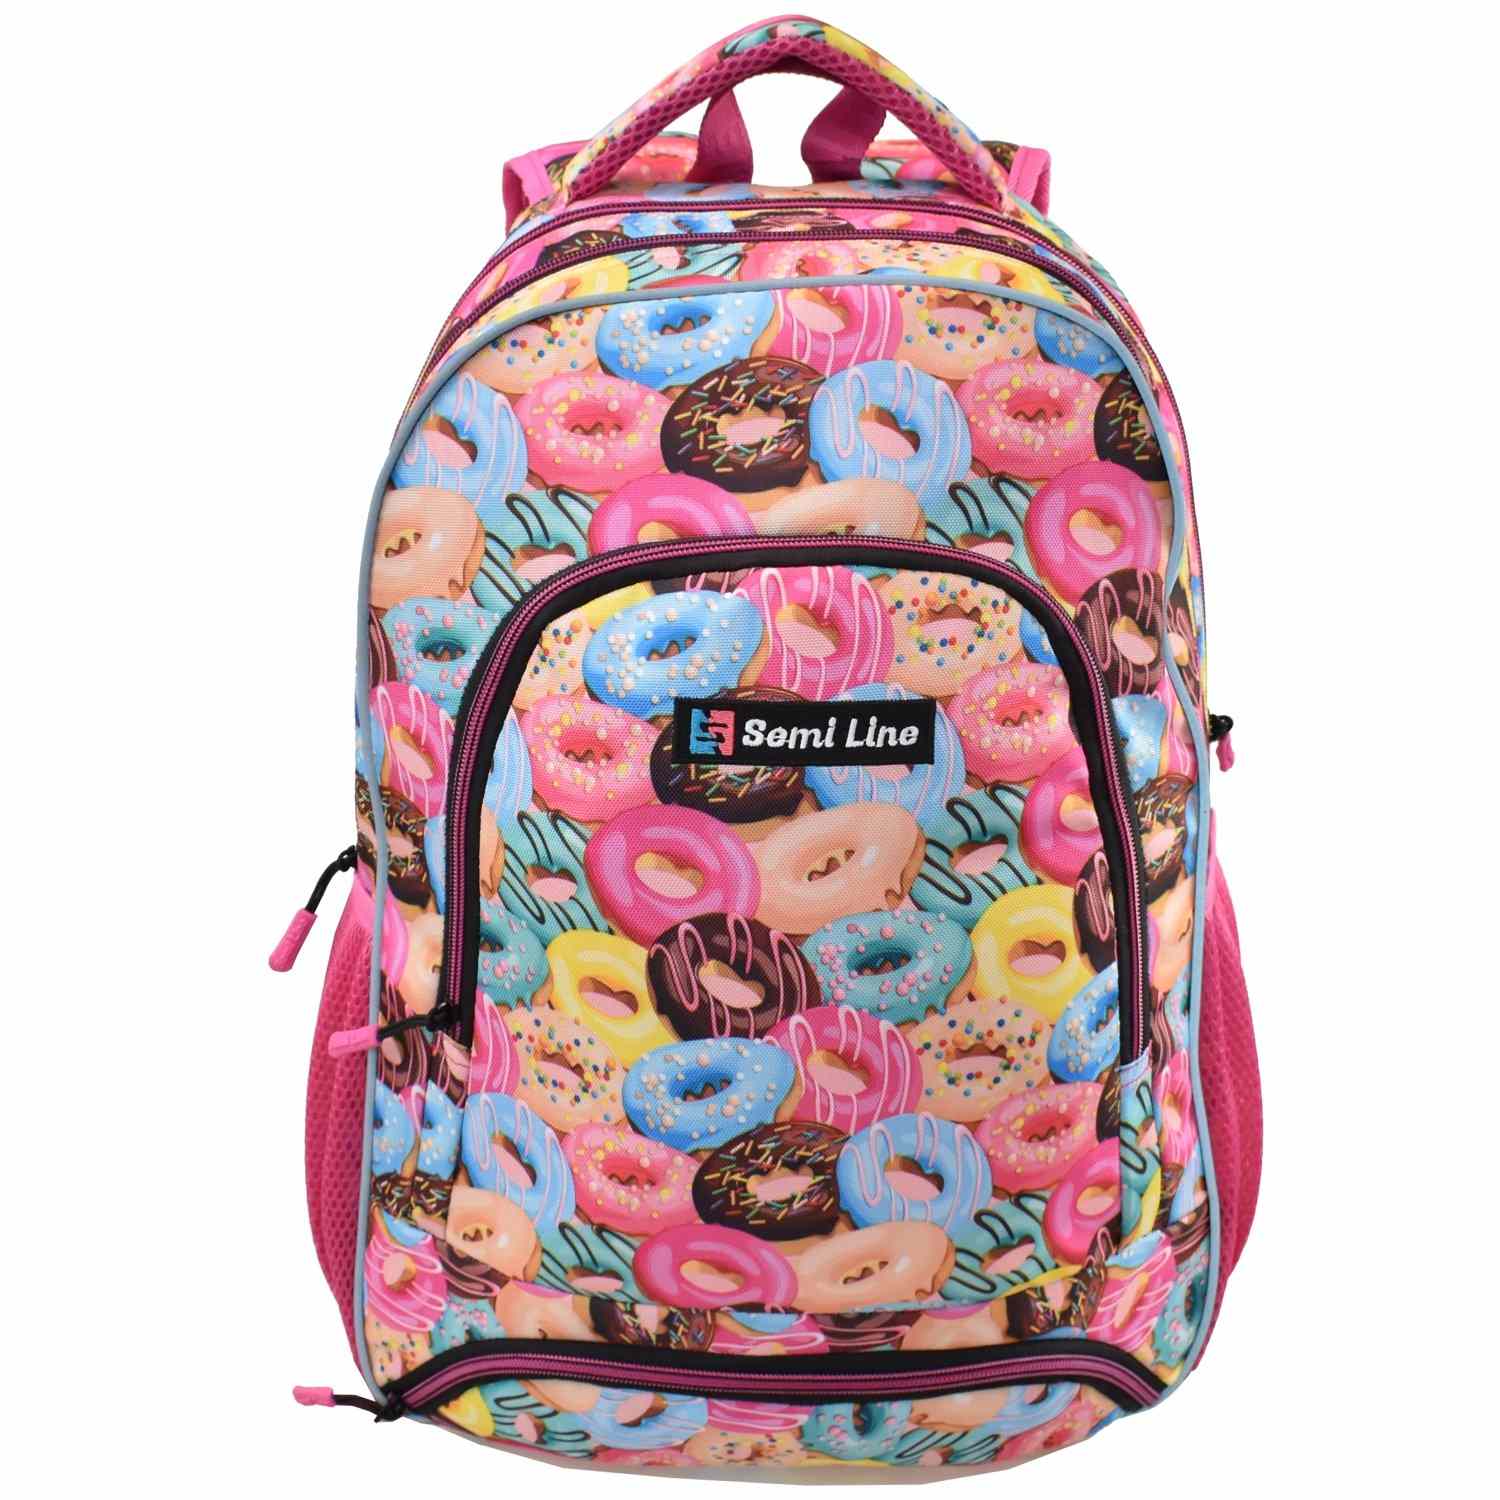 Semiline Kids's Backpack